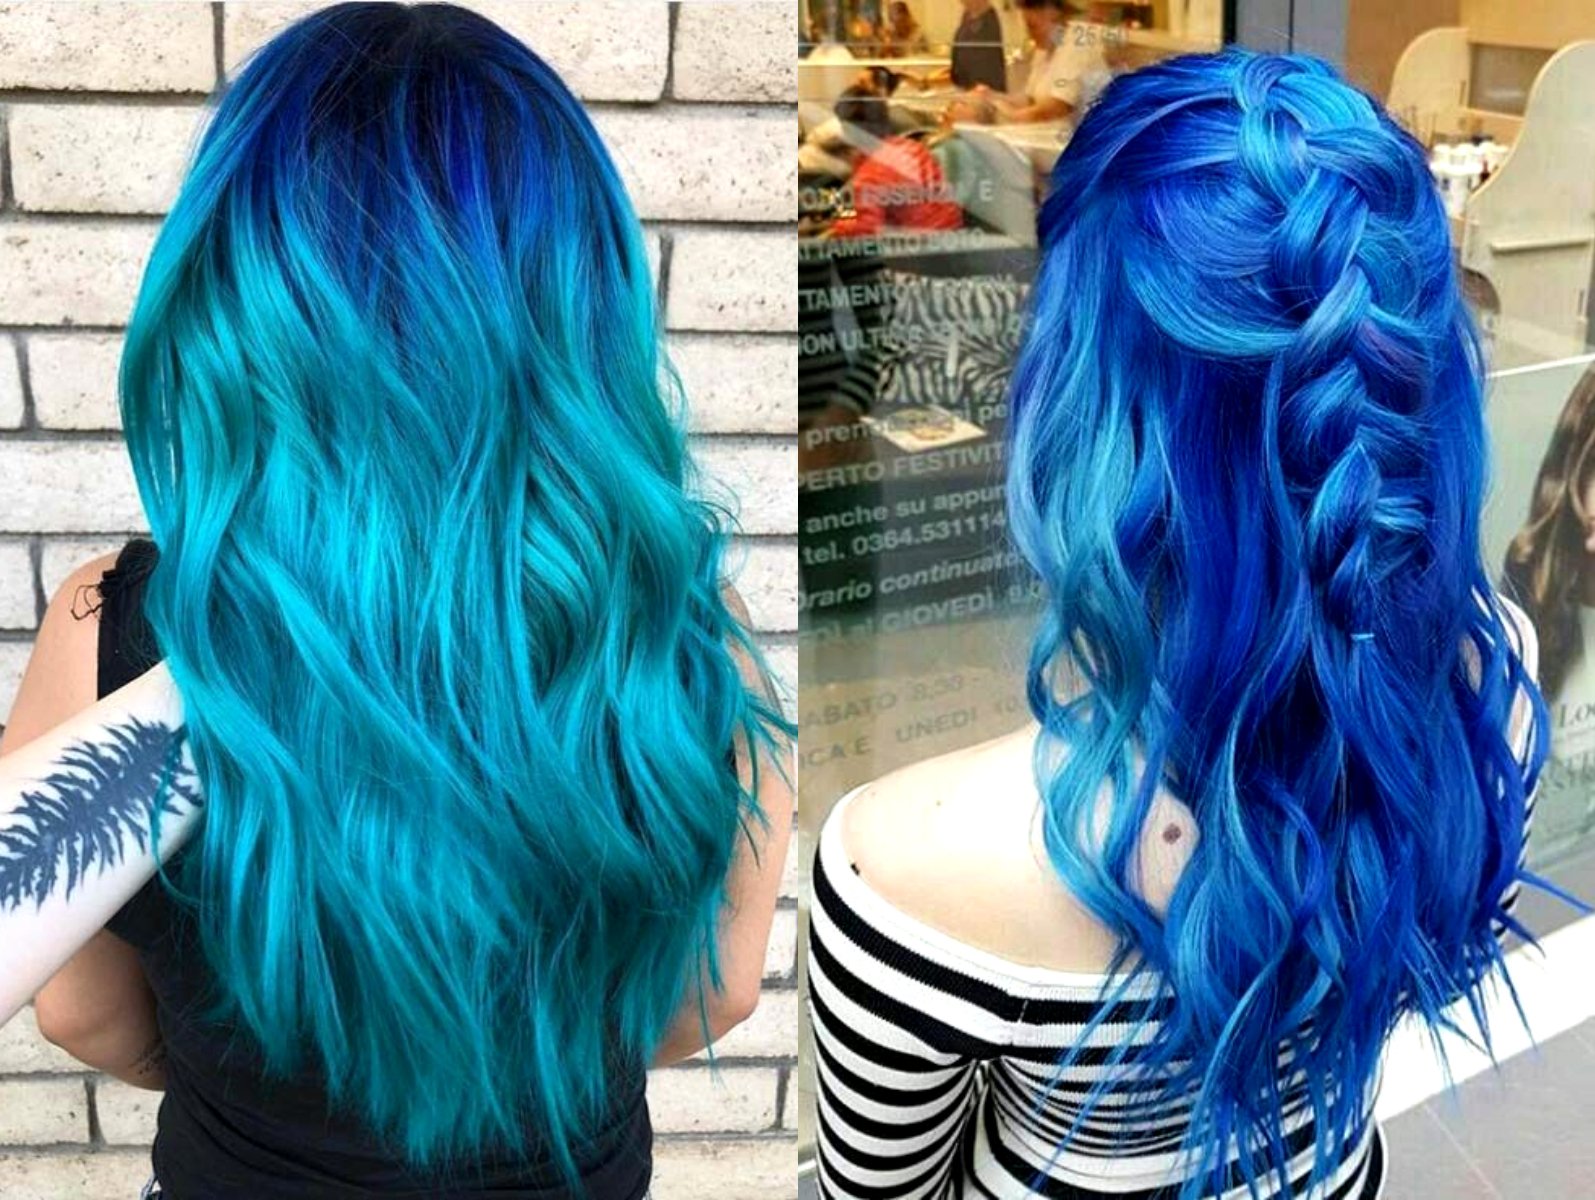 2. 20 Dark Blue Balayage Hair Ideas to Try This Season - wide 5